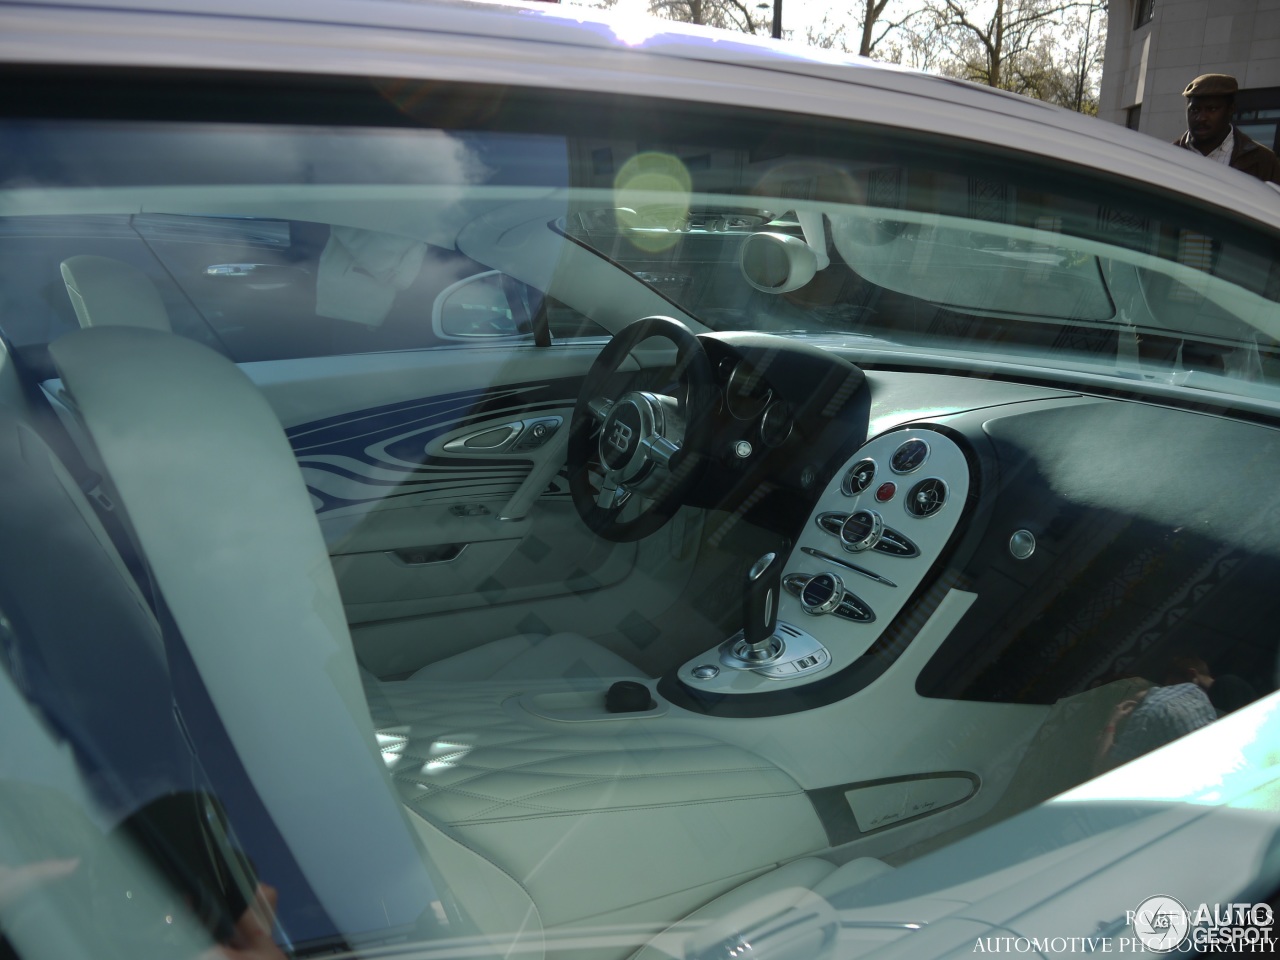 Bugatti Veyron 16.4 Grand Sport L'Or Blanc